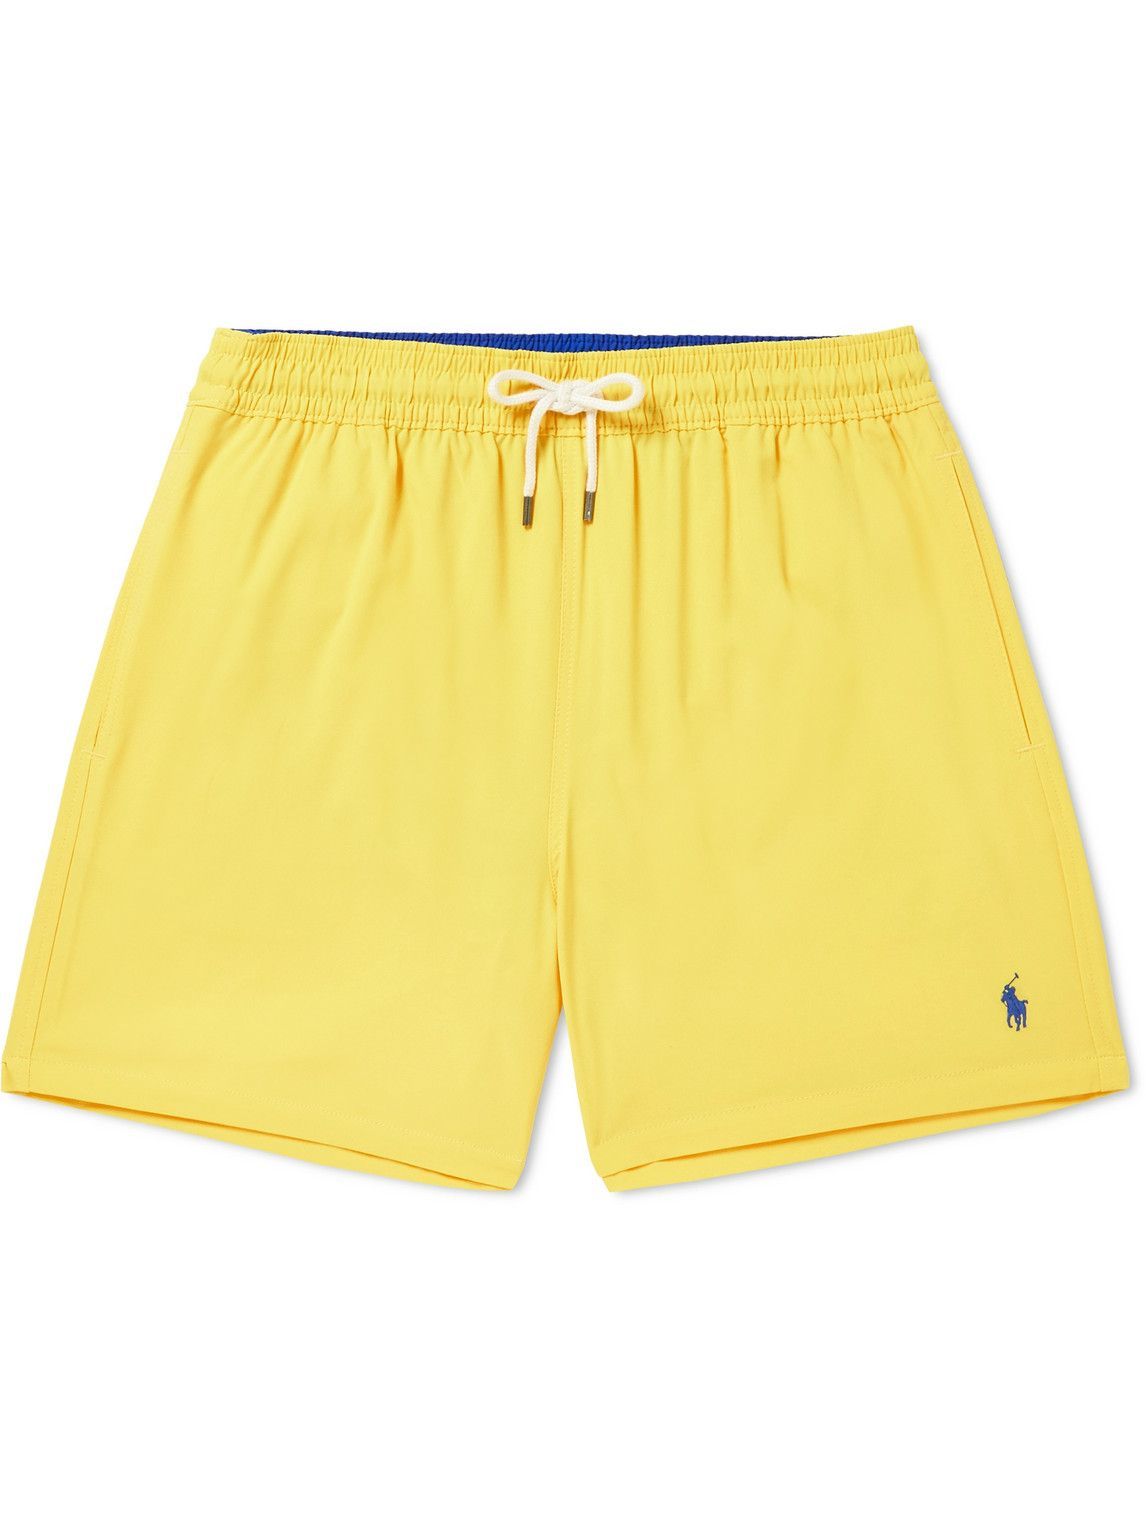 Polo Ralph Lauren - Traveler Mid-Length Recycled Swim Shorts - Yellow